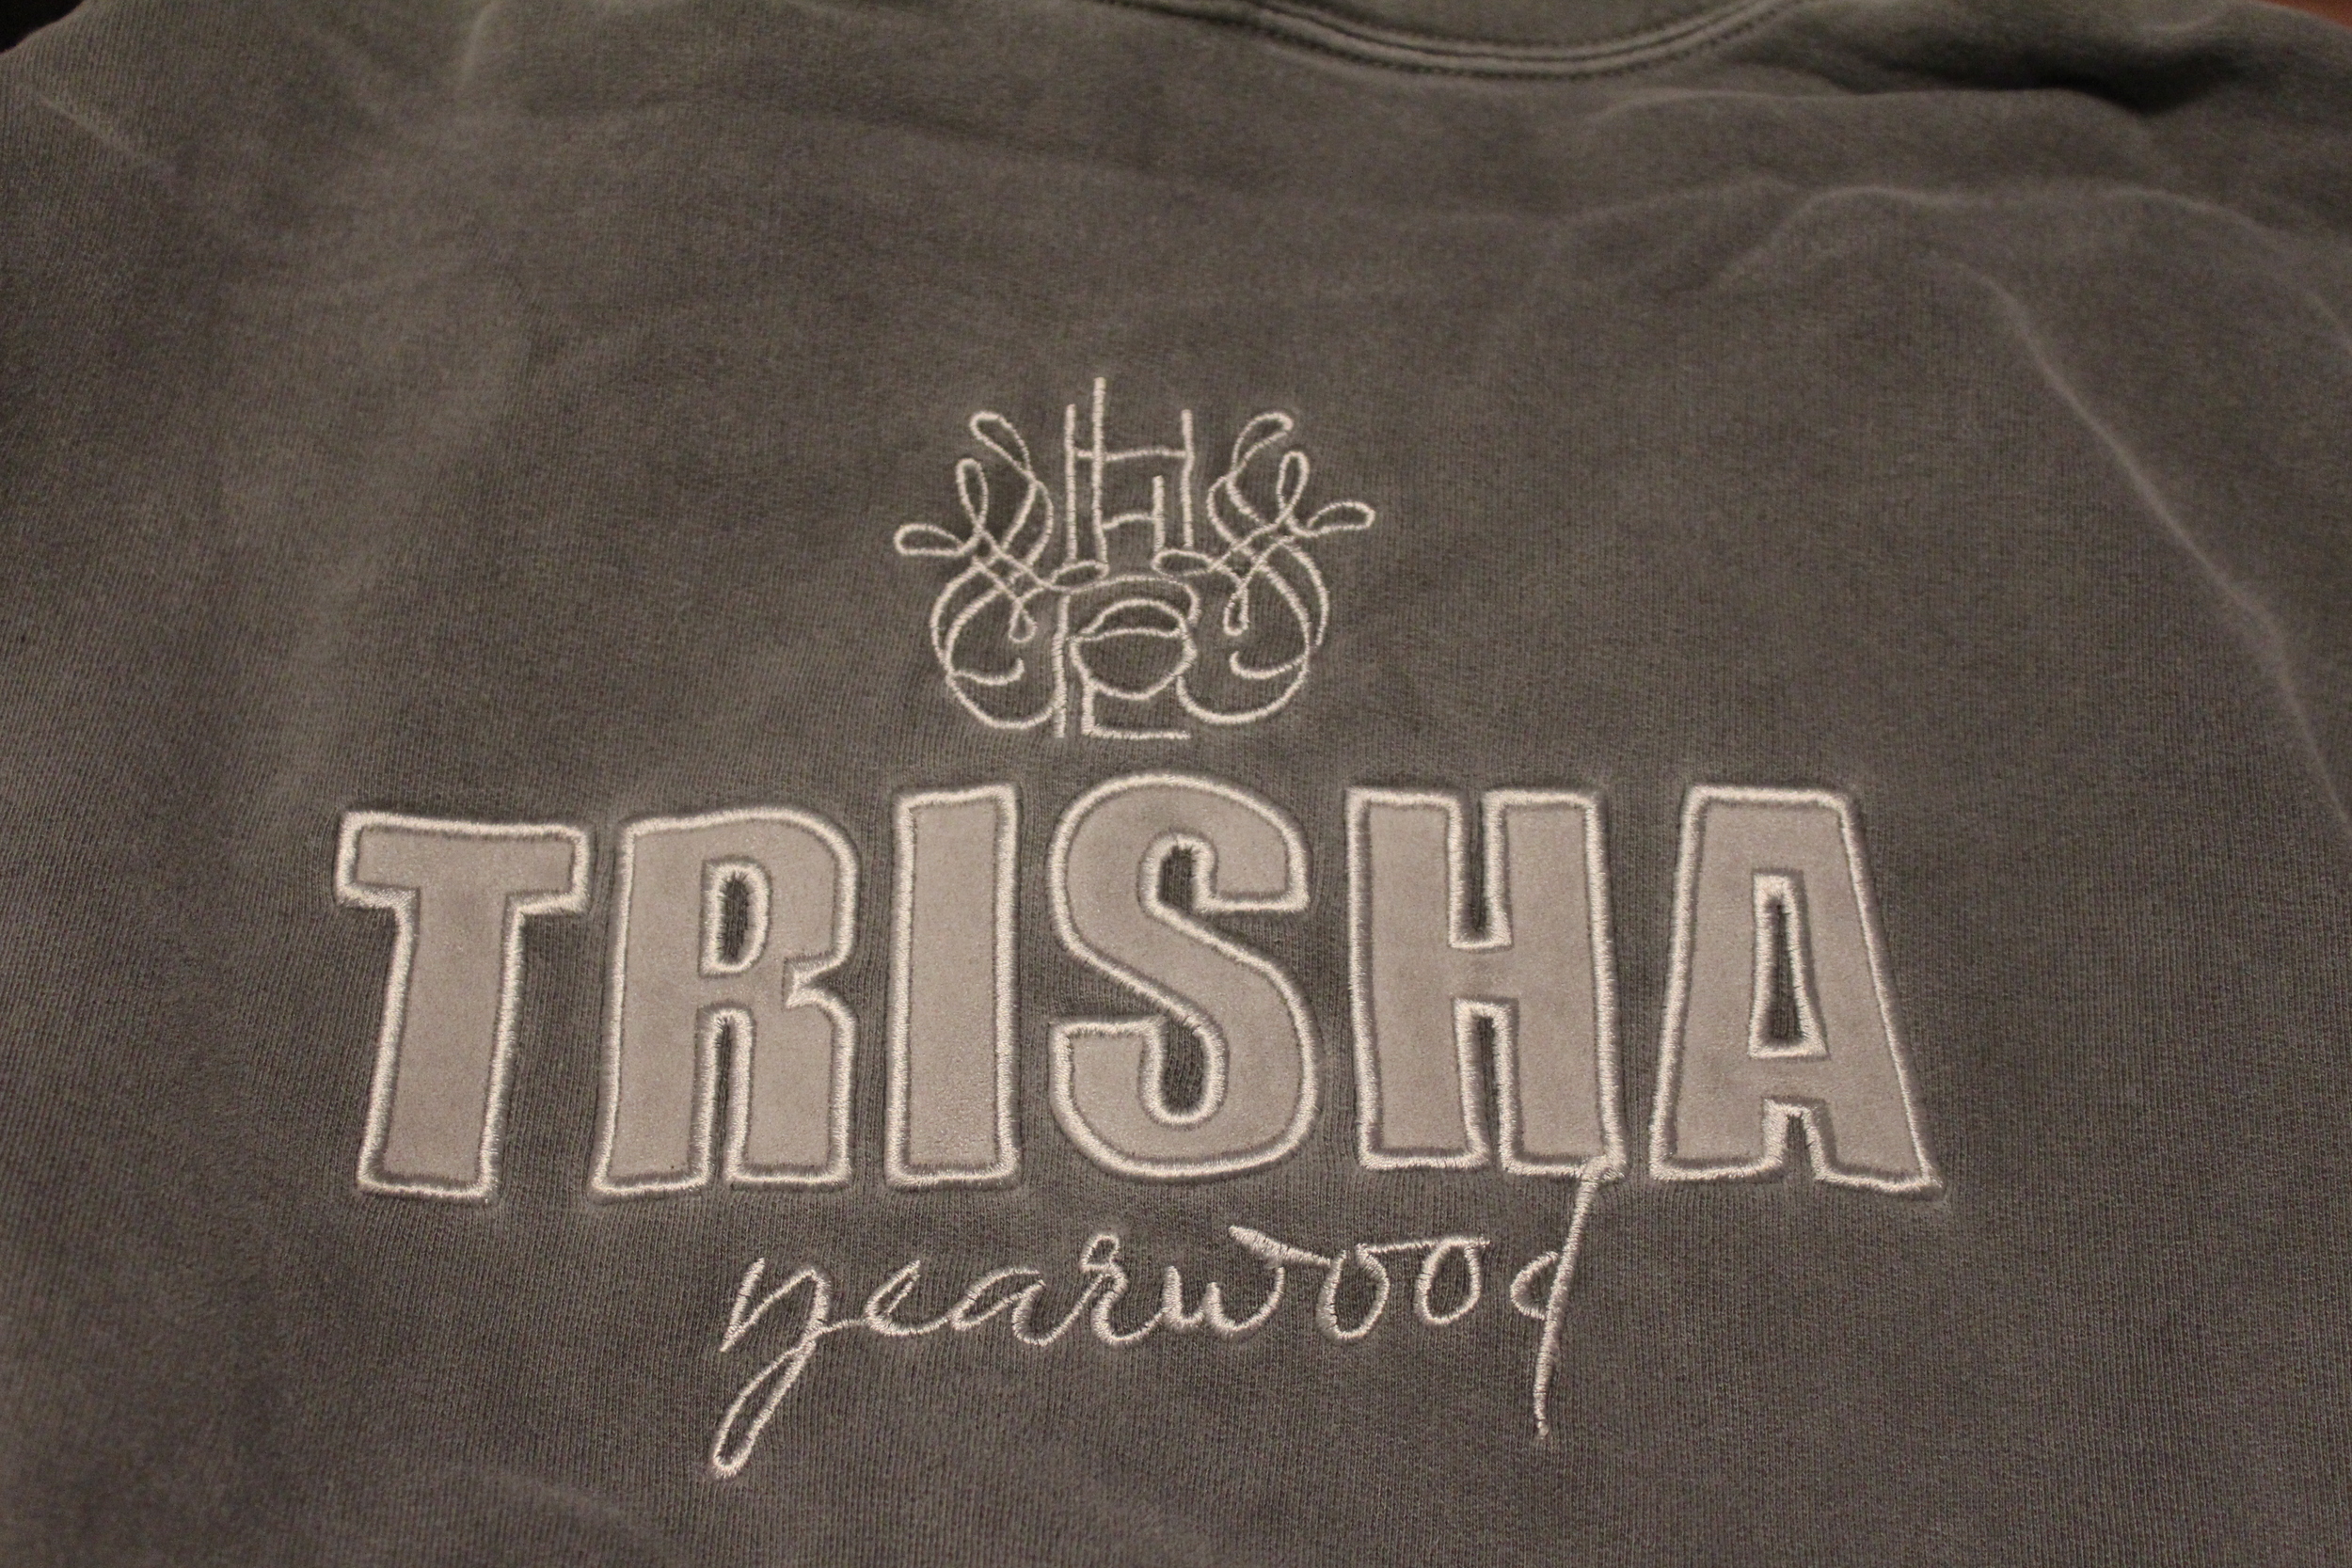 Sweatshirt Design, Trisha Yearwood 2011